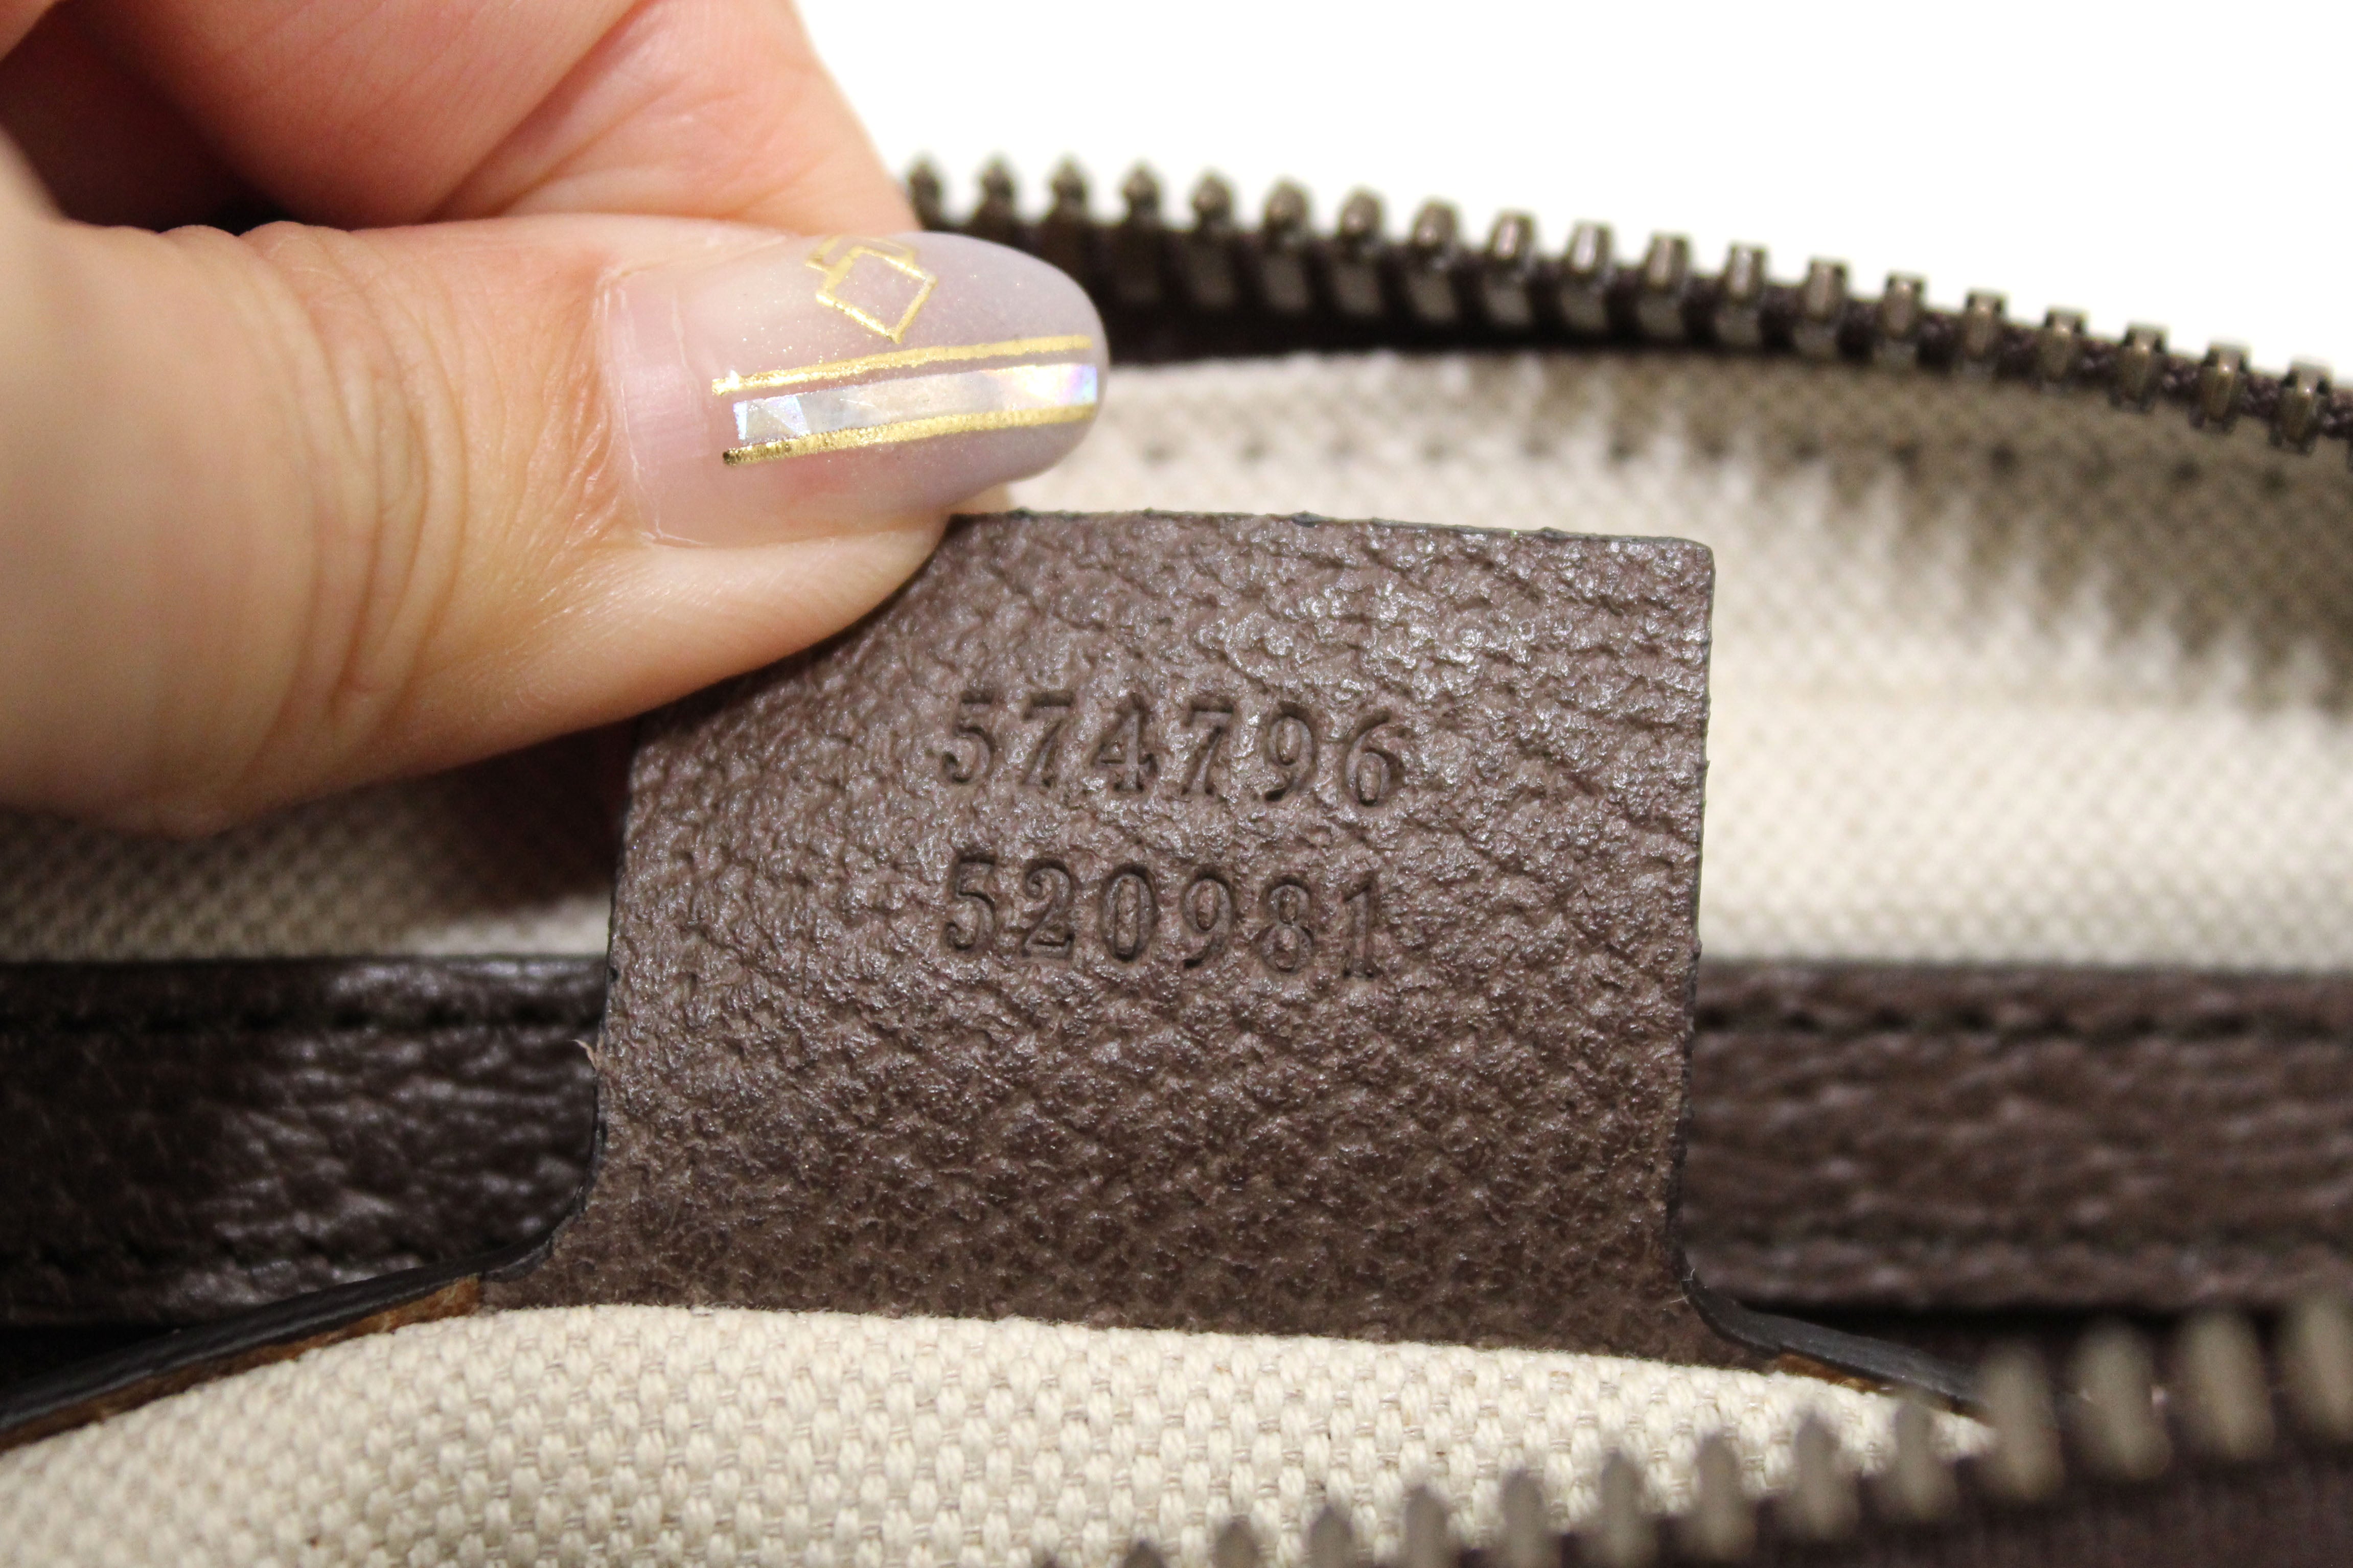 Authentic Gucci Ophidia GG Canvas Belt Bag